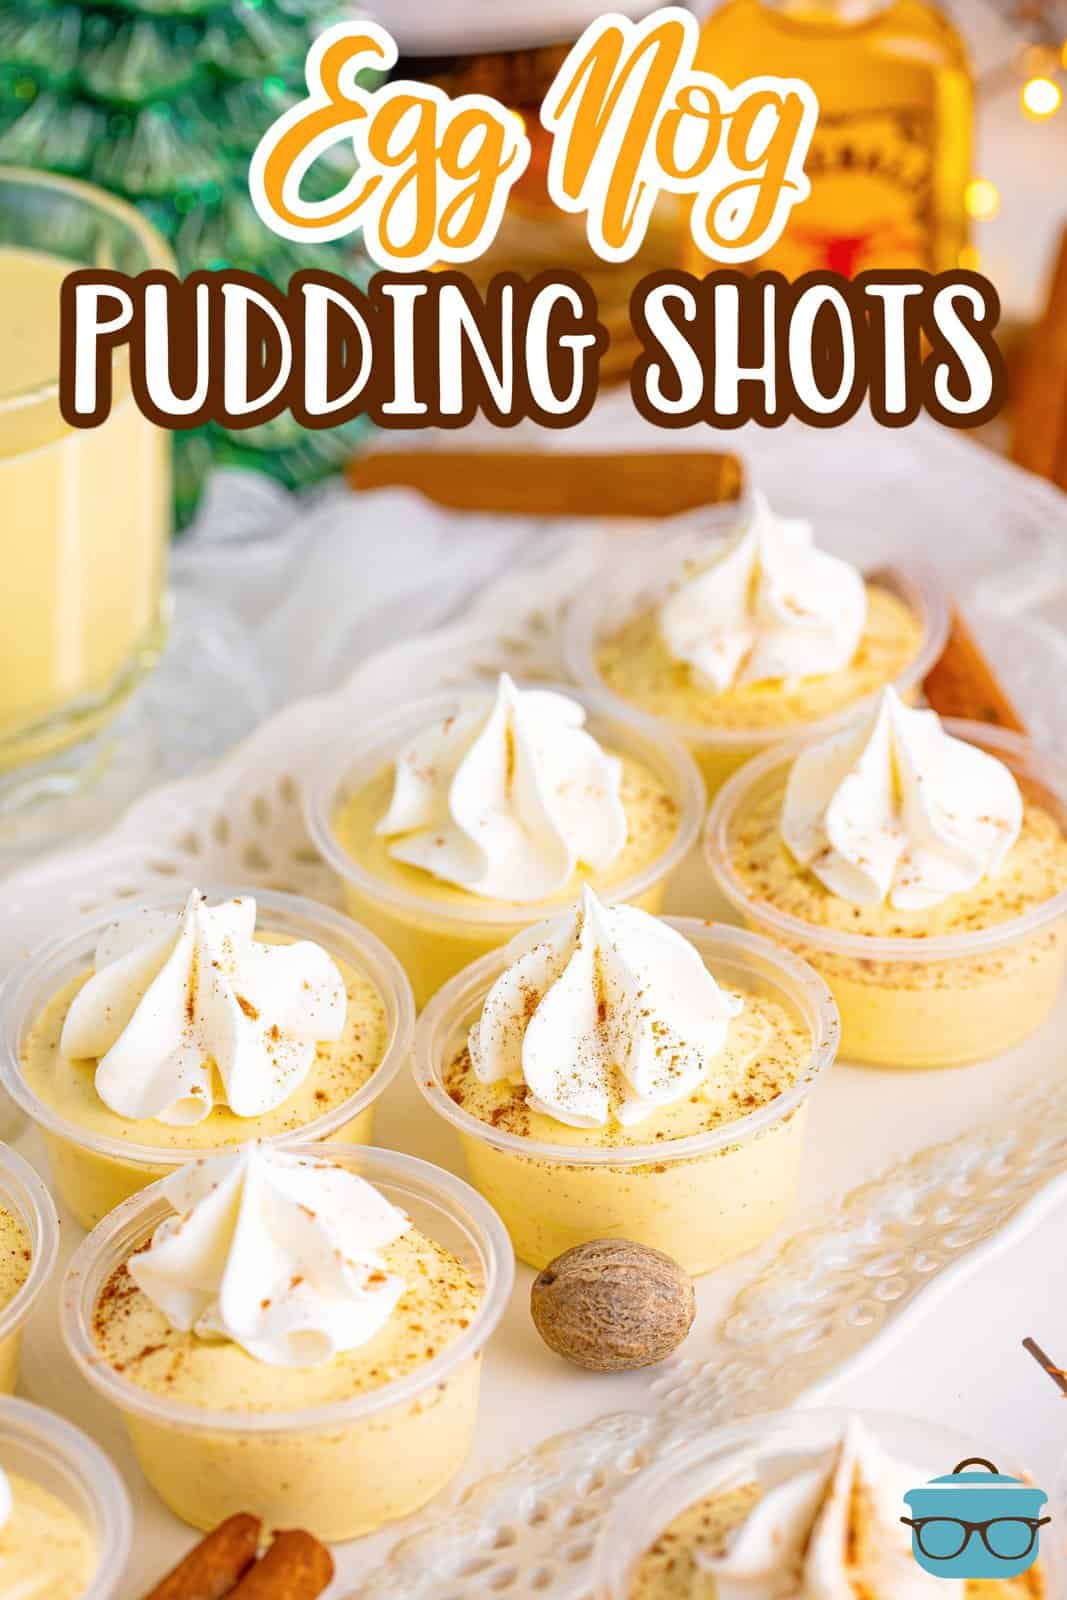 Slightly overhead Pinterest image of Egg Nog Pudding Shots on white platter, garnished with nutmeg and cinnamon sticks on platter.